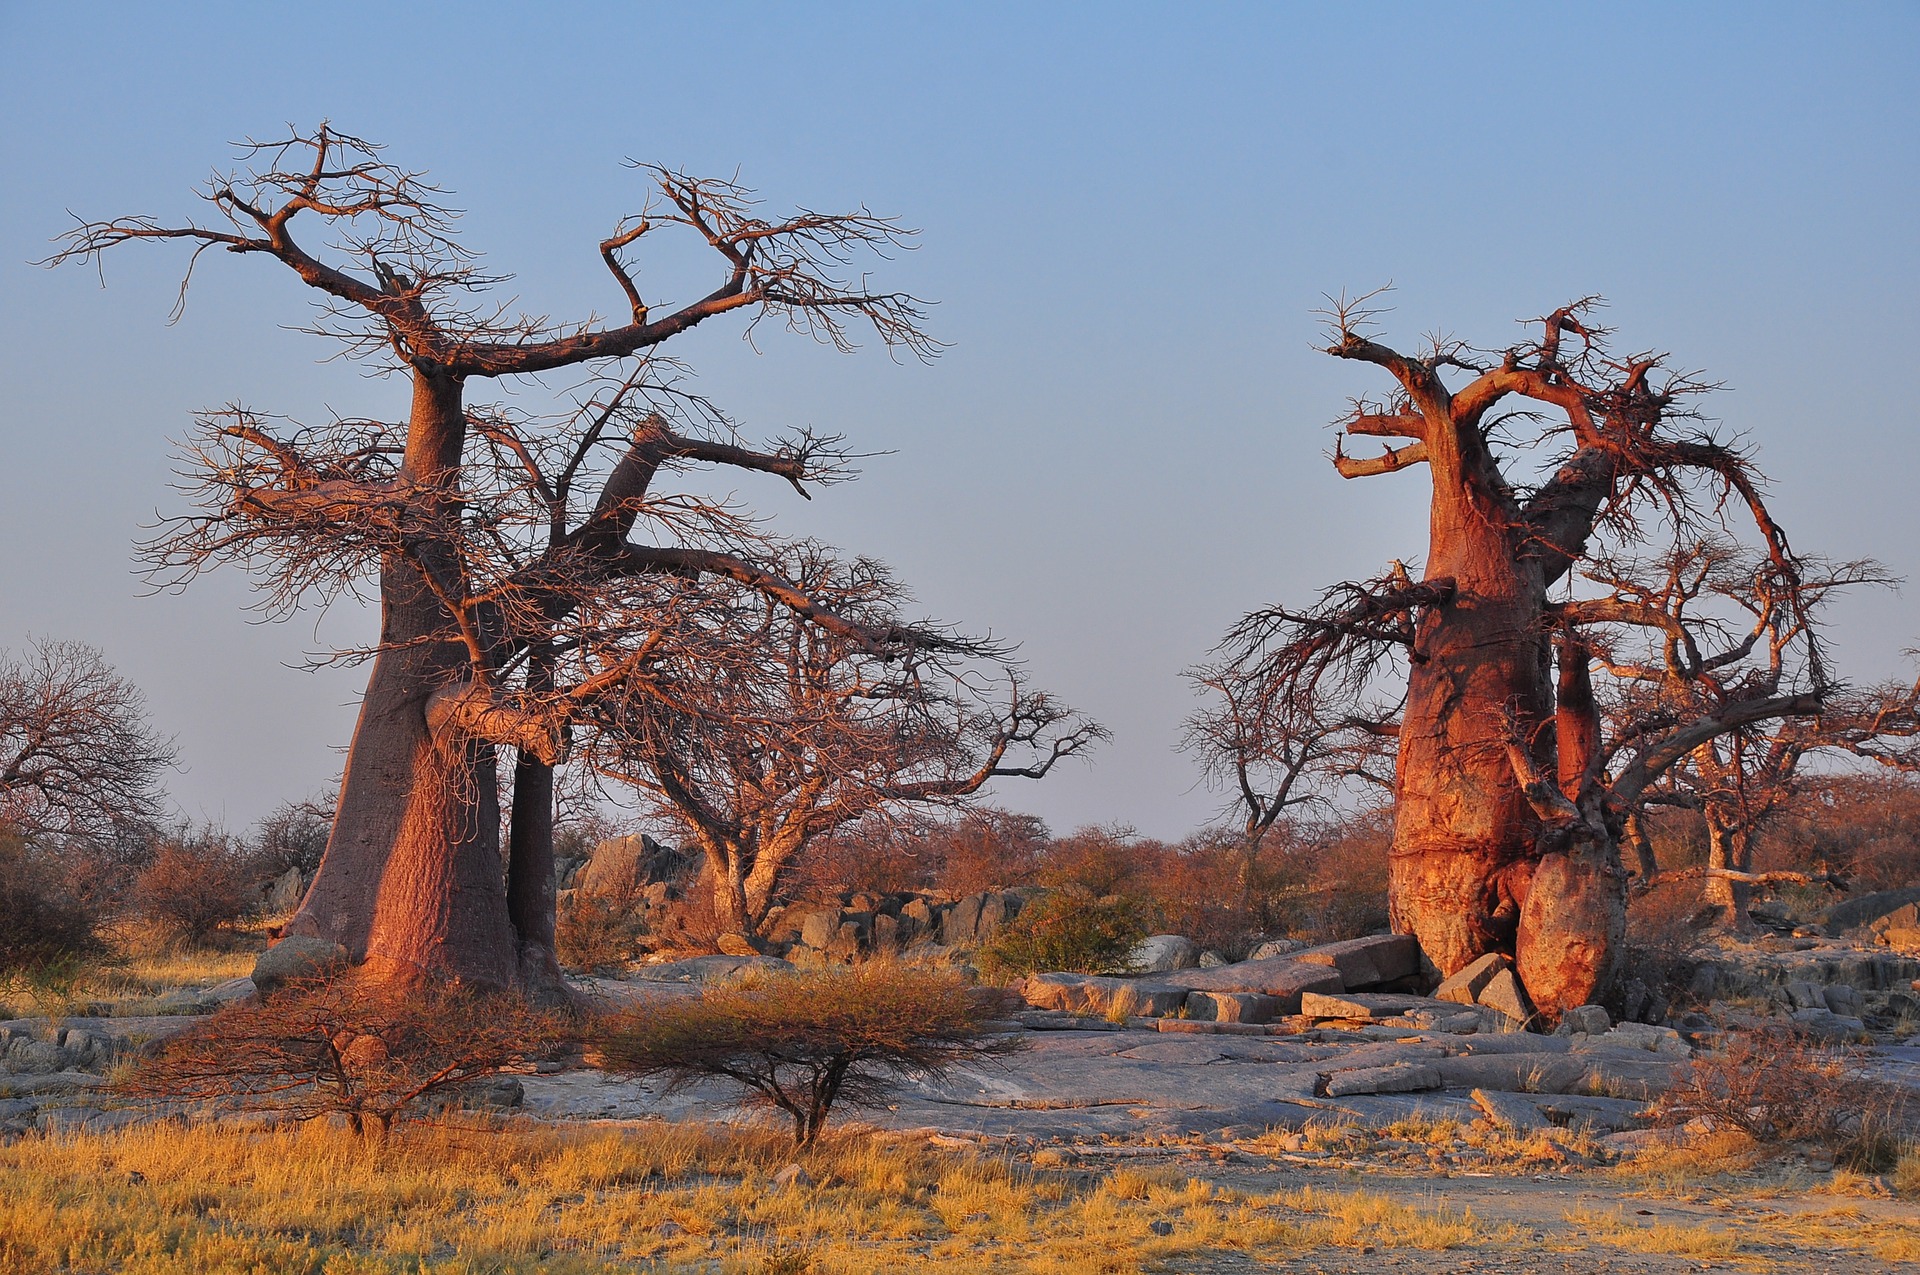 An image of Baobab trees